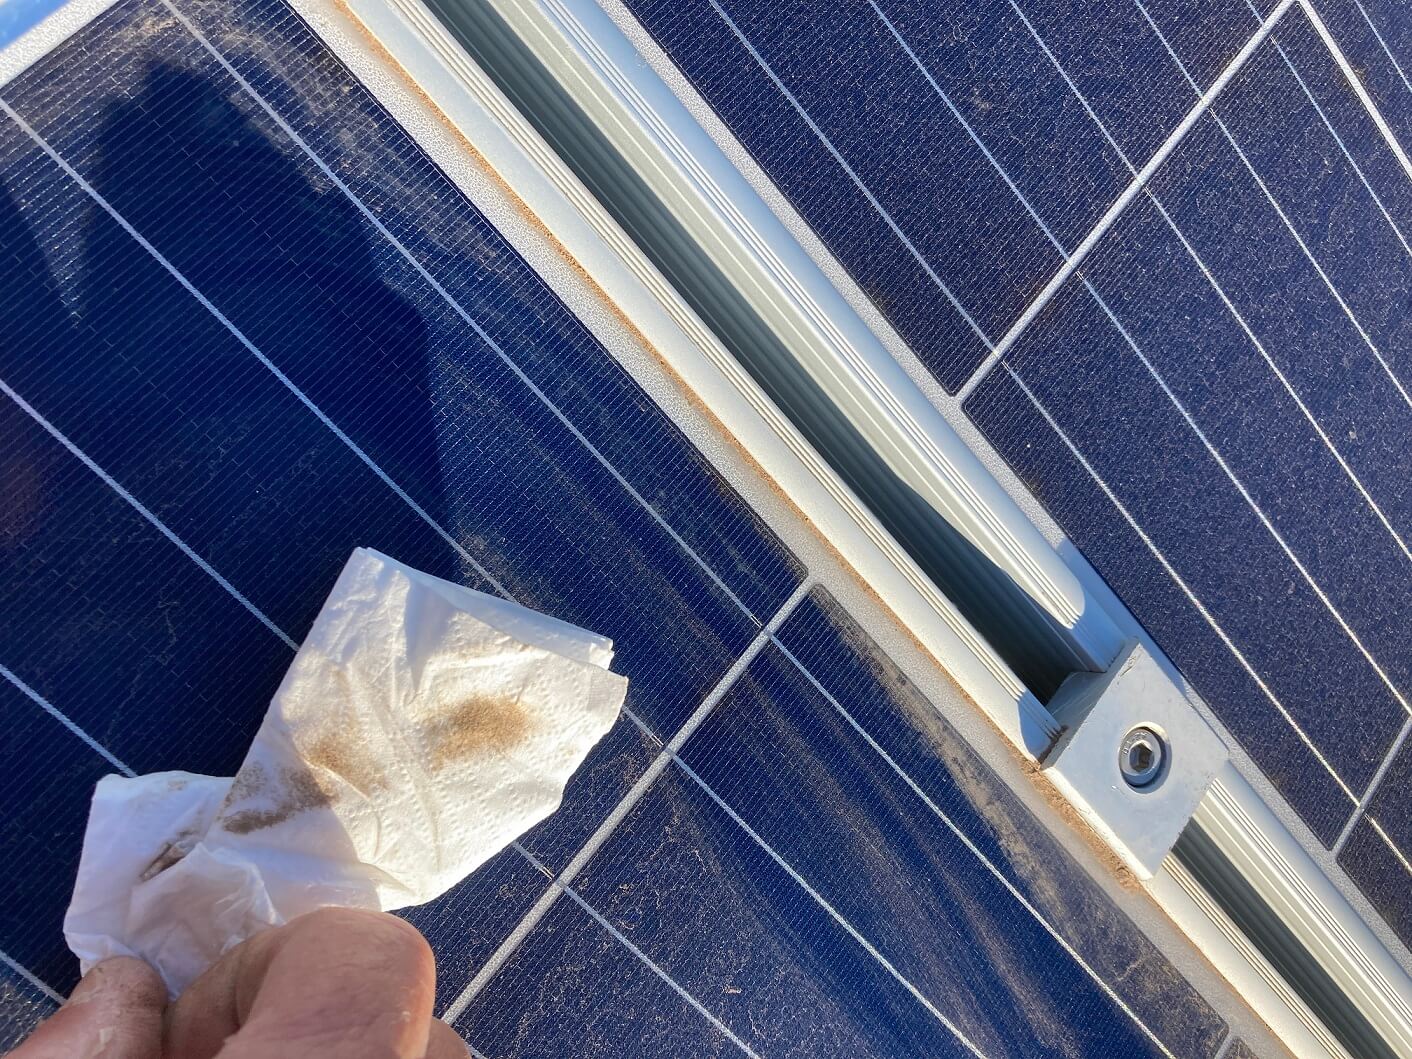 Dirty Solar Panels